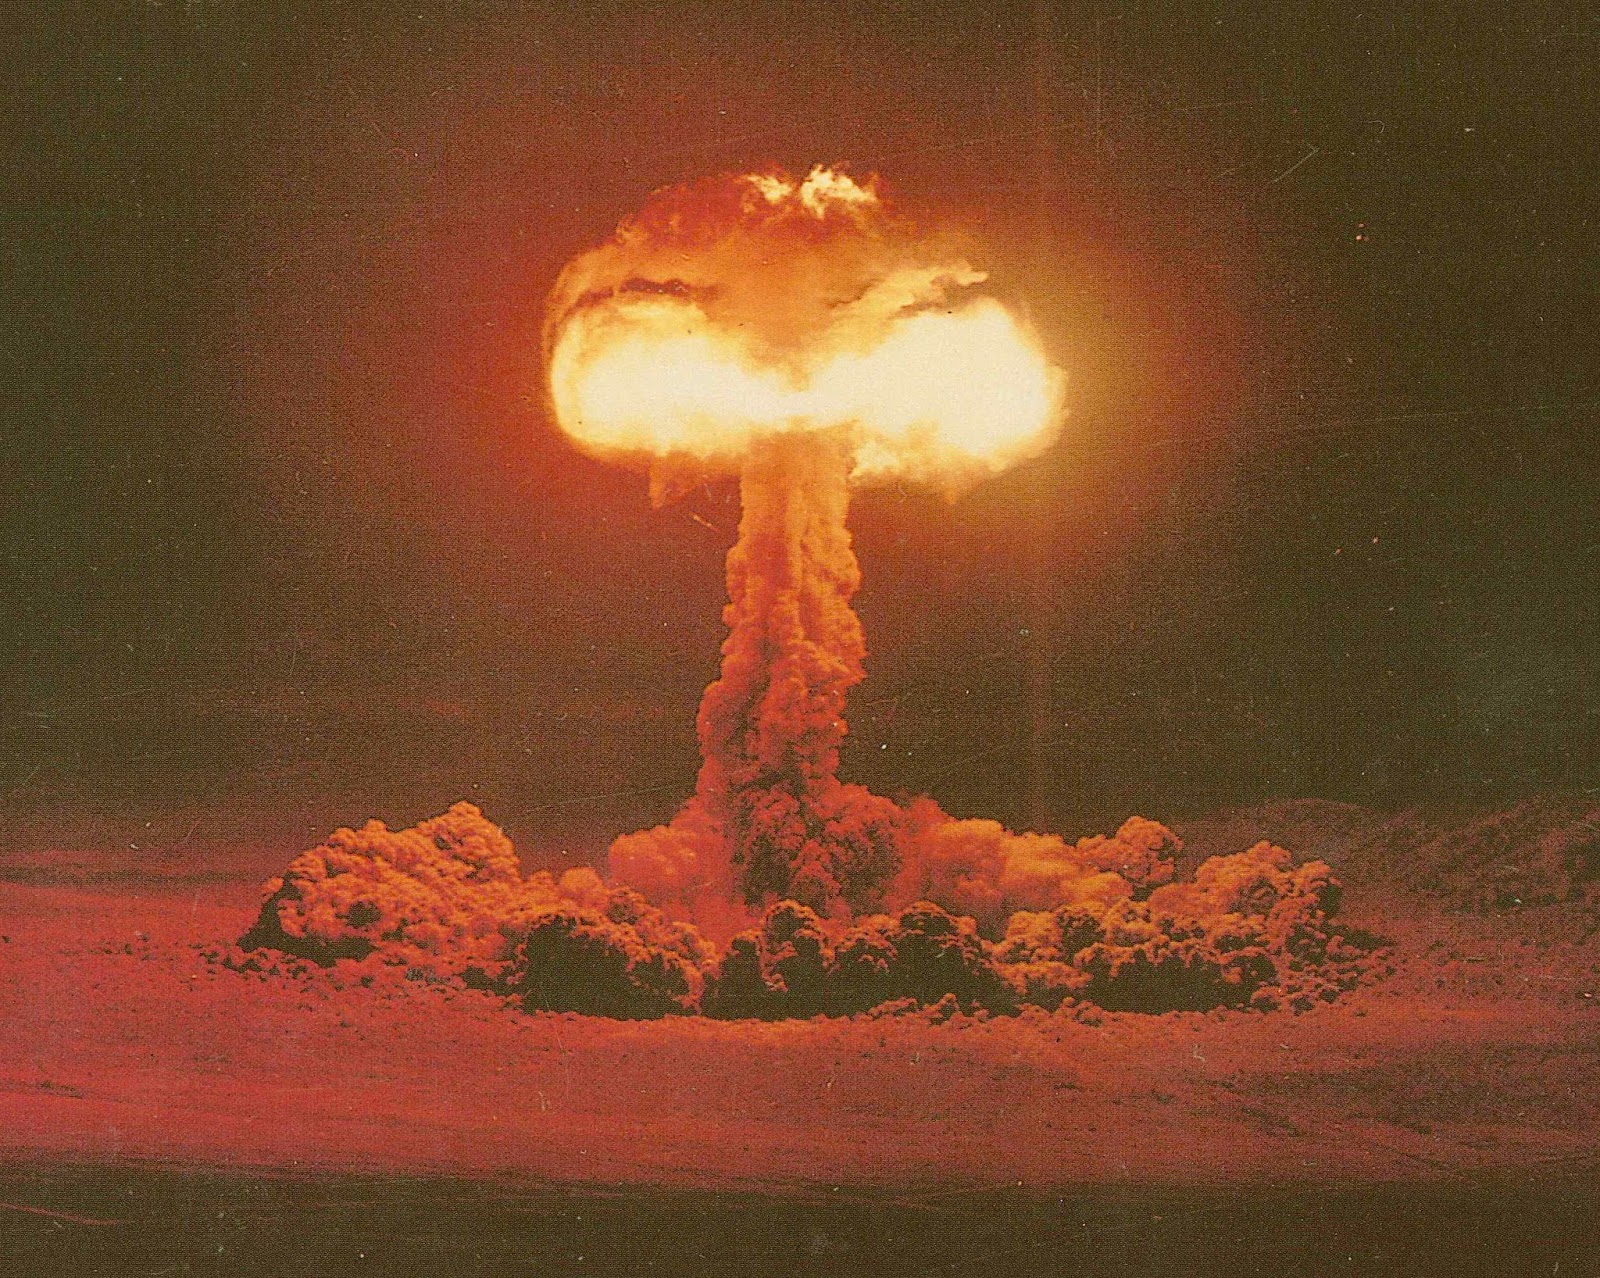 Japan No Atomic Bomb Jnab 日本原爆禁止の会 水爆がネヴァダ砂漠の空中で炸裂させ巨大な火の玉のキノコ雲が立ち登った